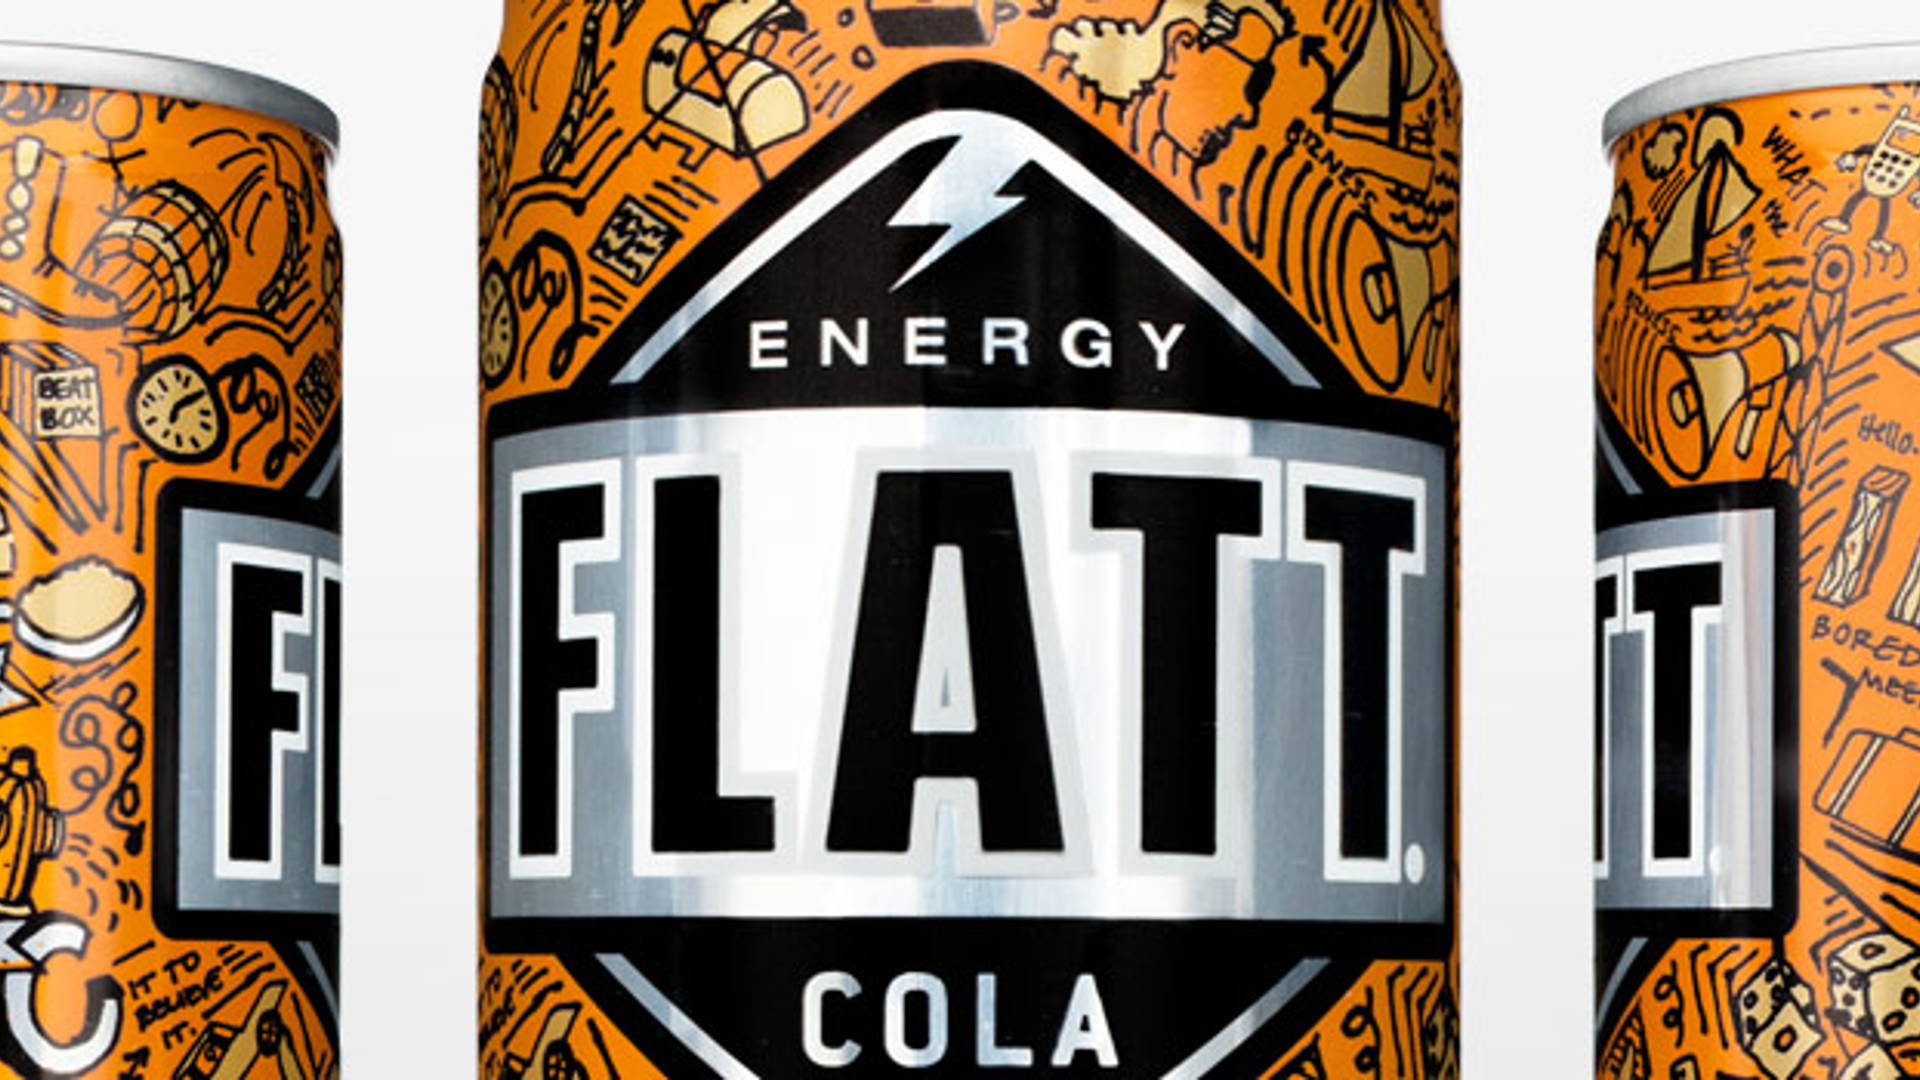 Featured image for Flatt Energy Cola